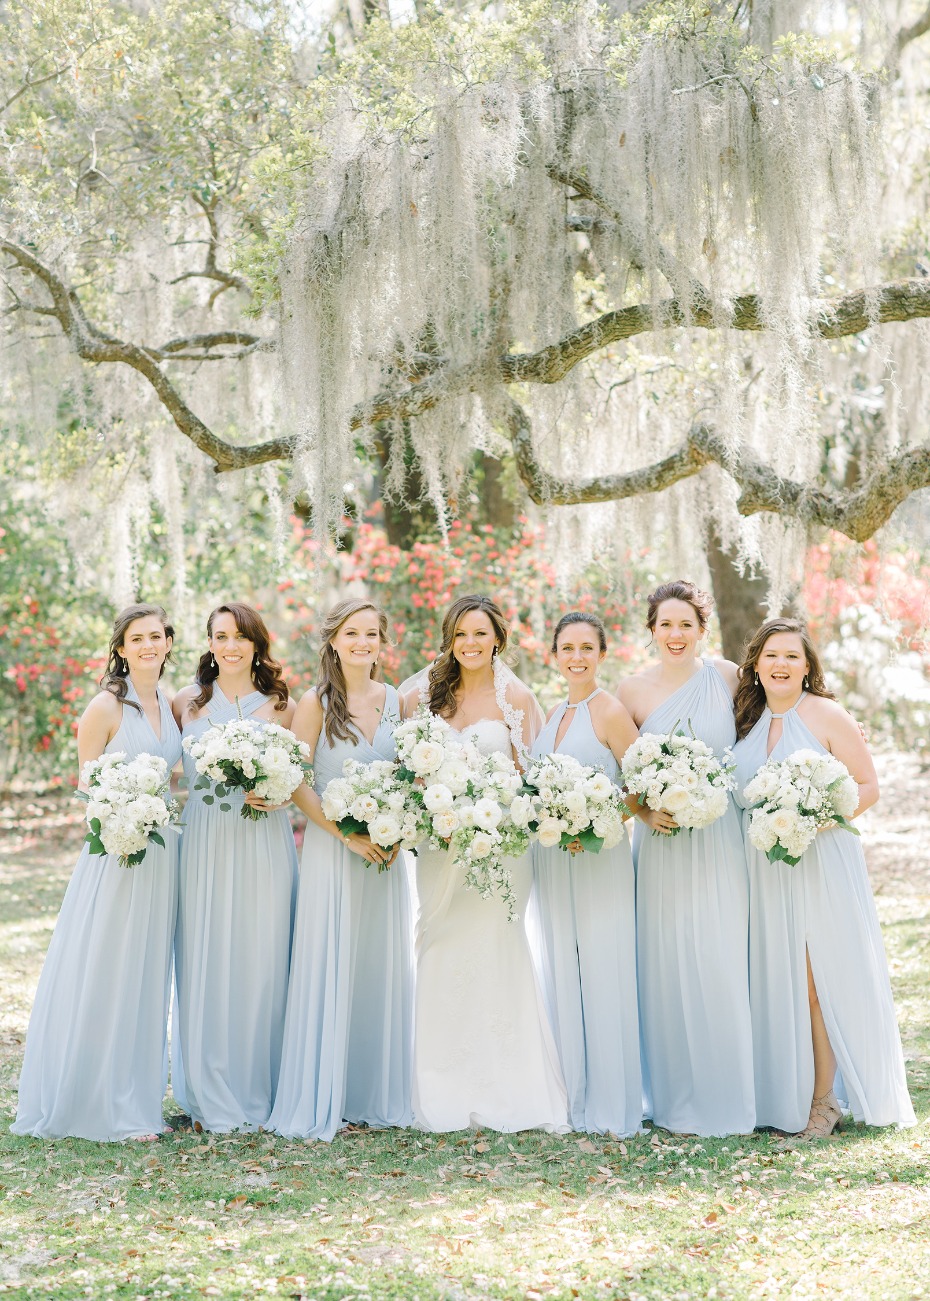 Bridesmaids in blue